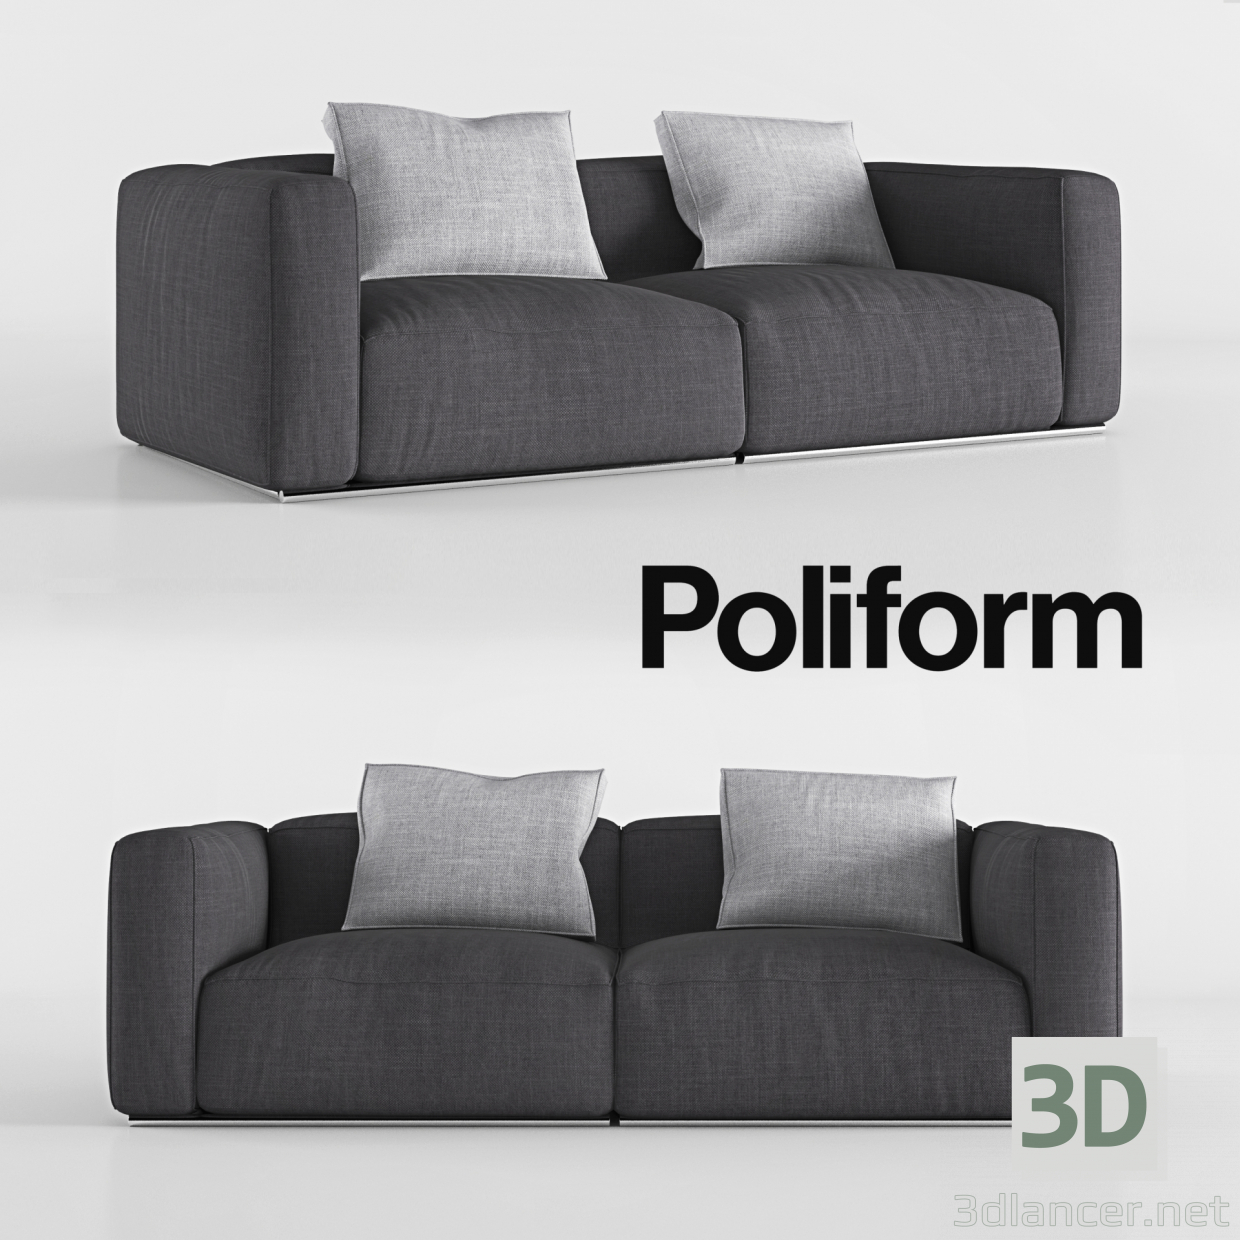 modello 3D divano shangai - anteprima